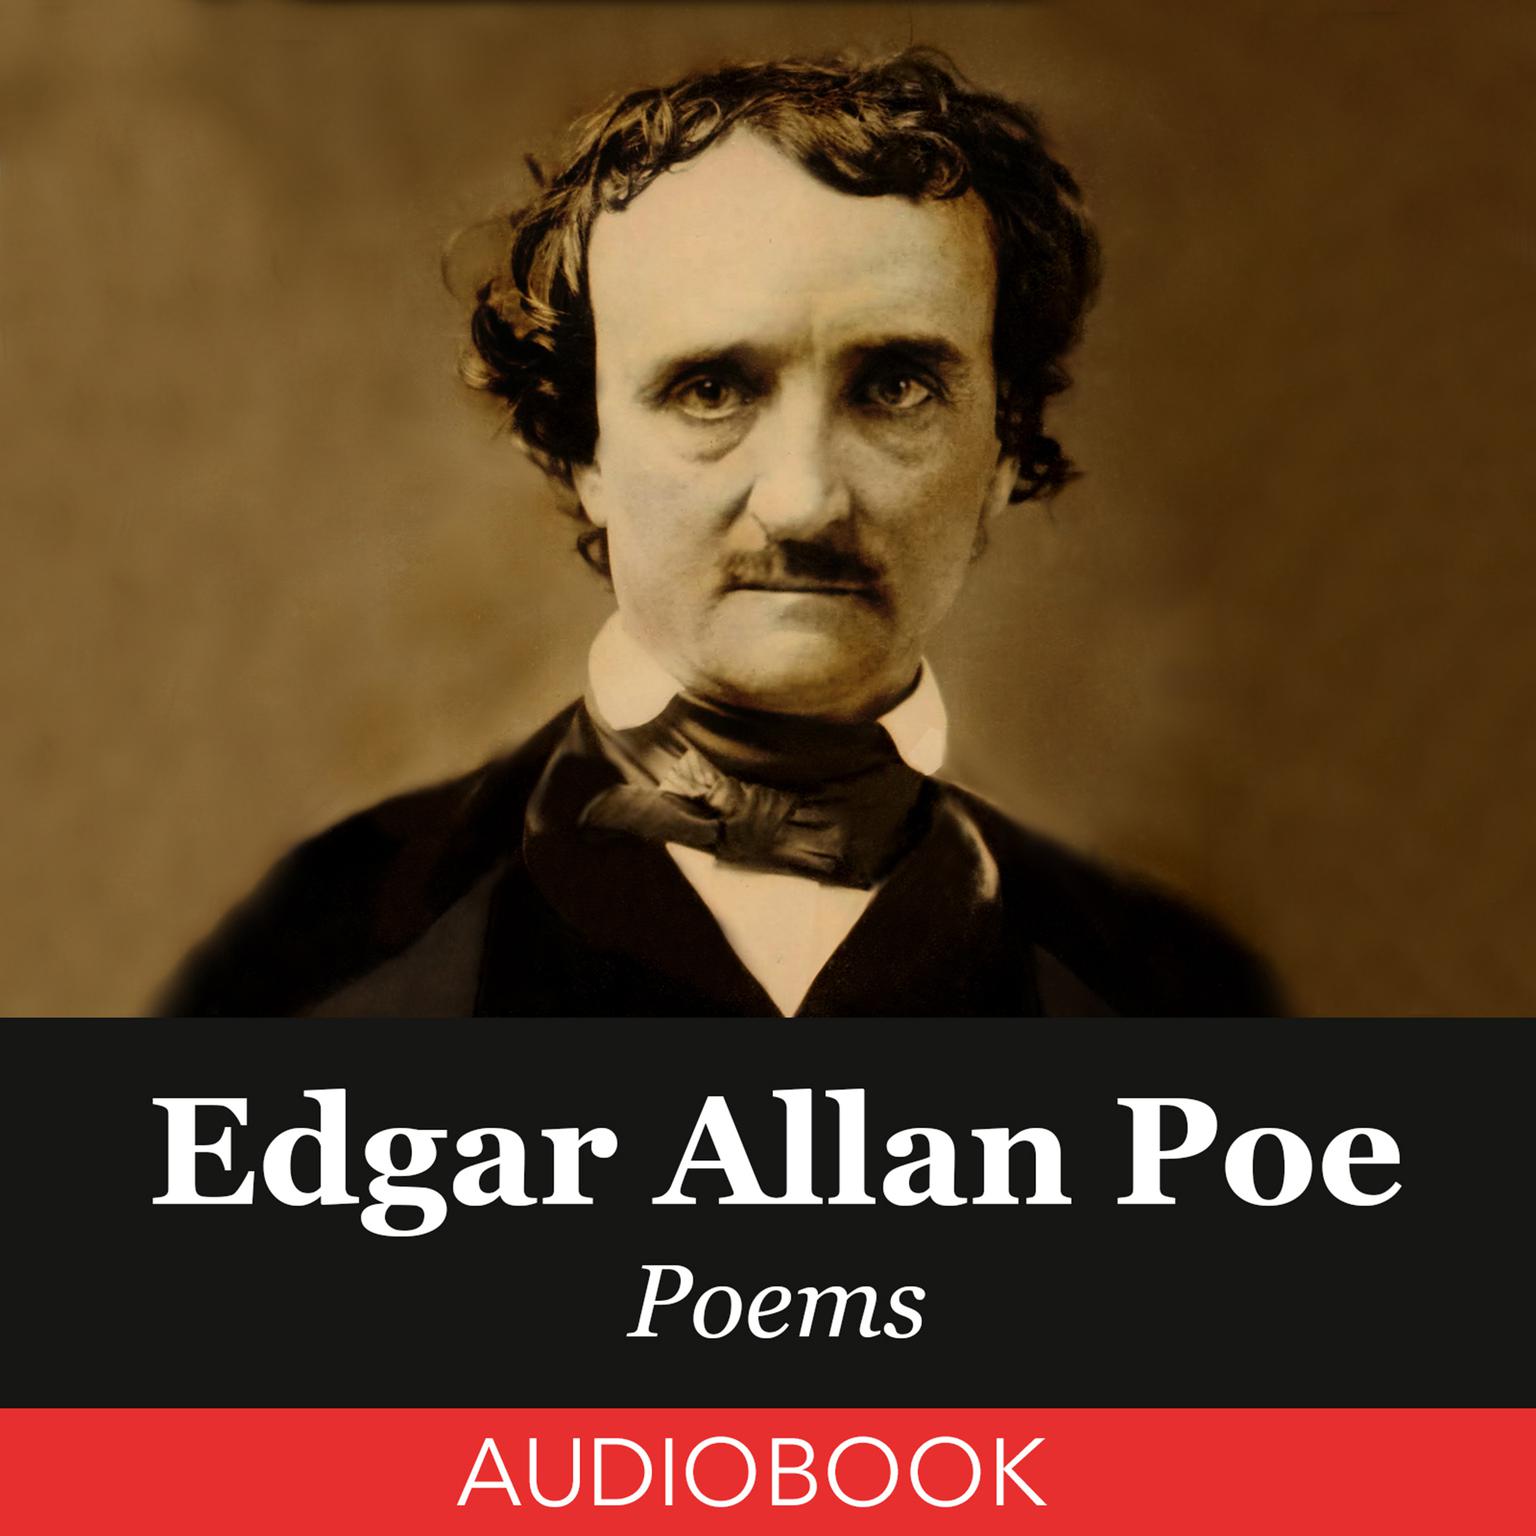 Edgar Allan Poe Poems Audiobook, by Edgar Allan Poe